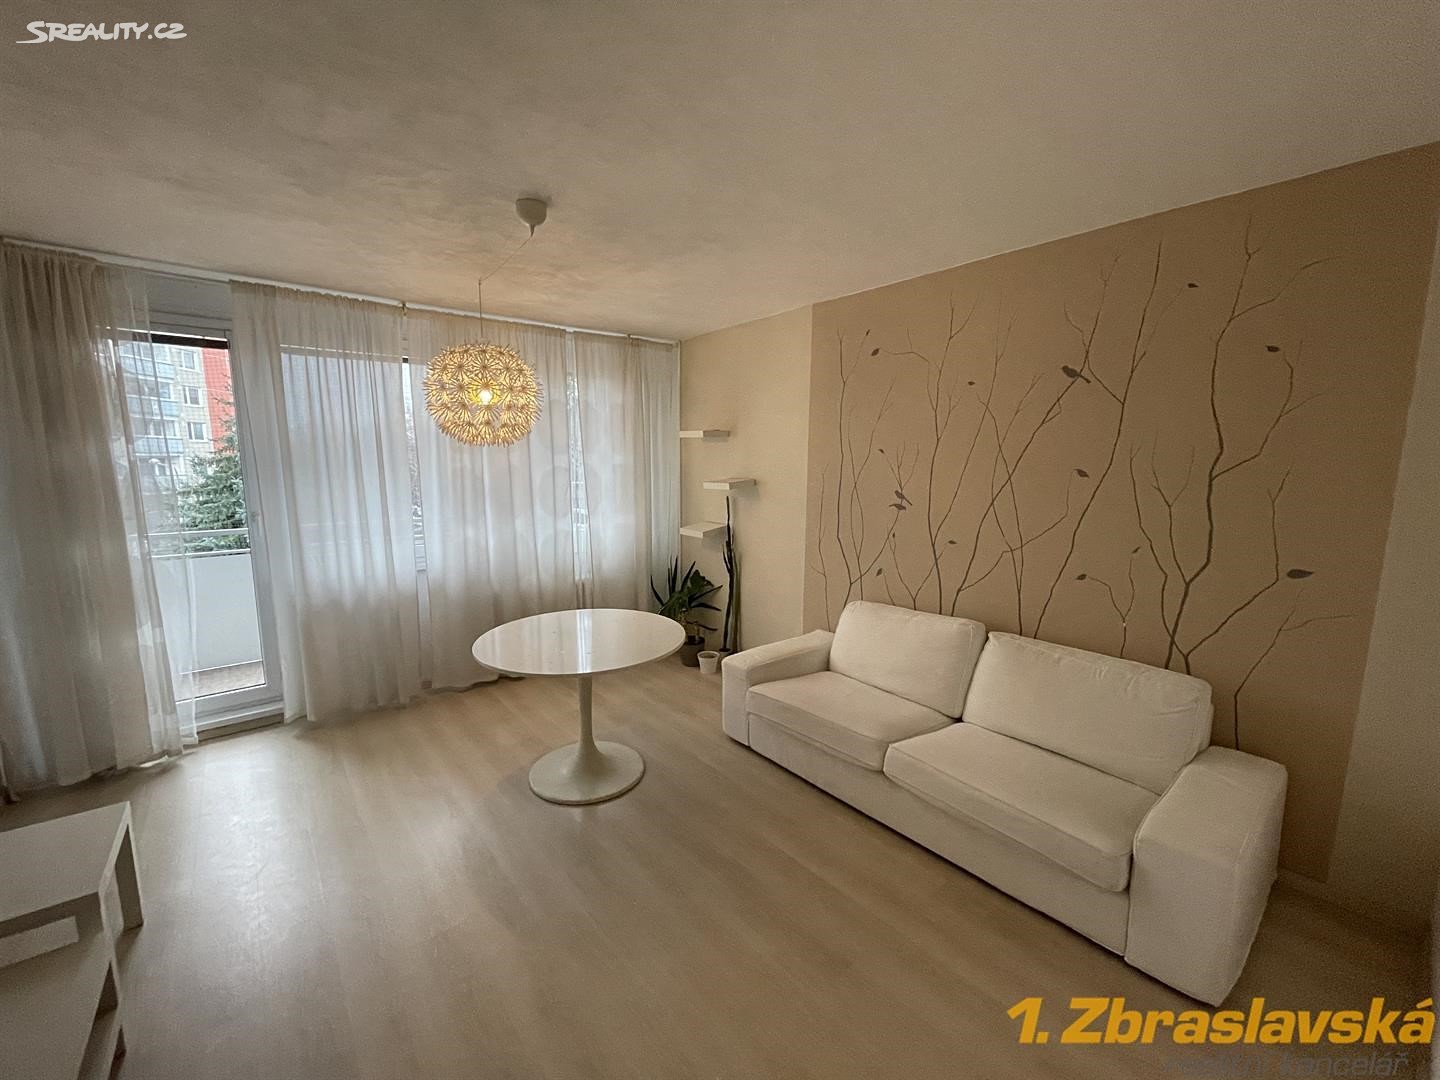 Pronájem bytu 3+1 74 m², Pražského, Praha 5 - Hlubočepy